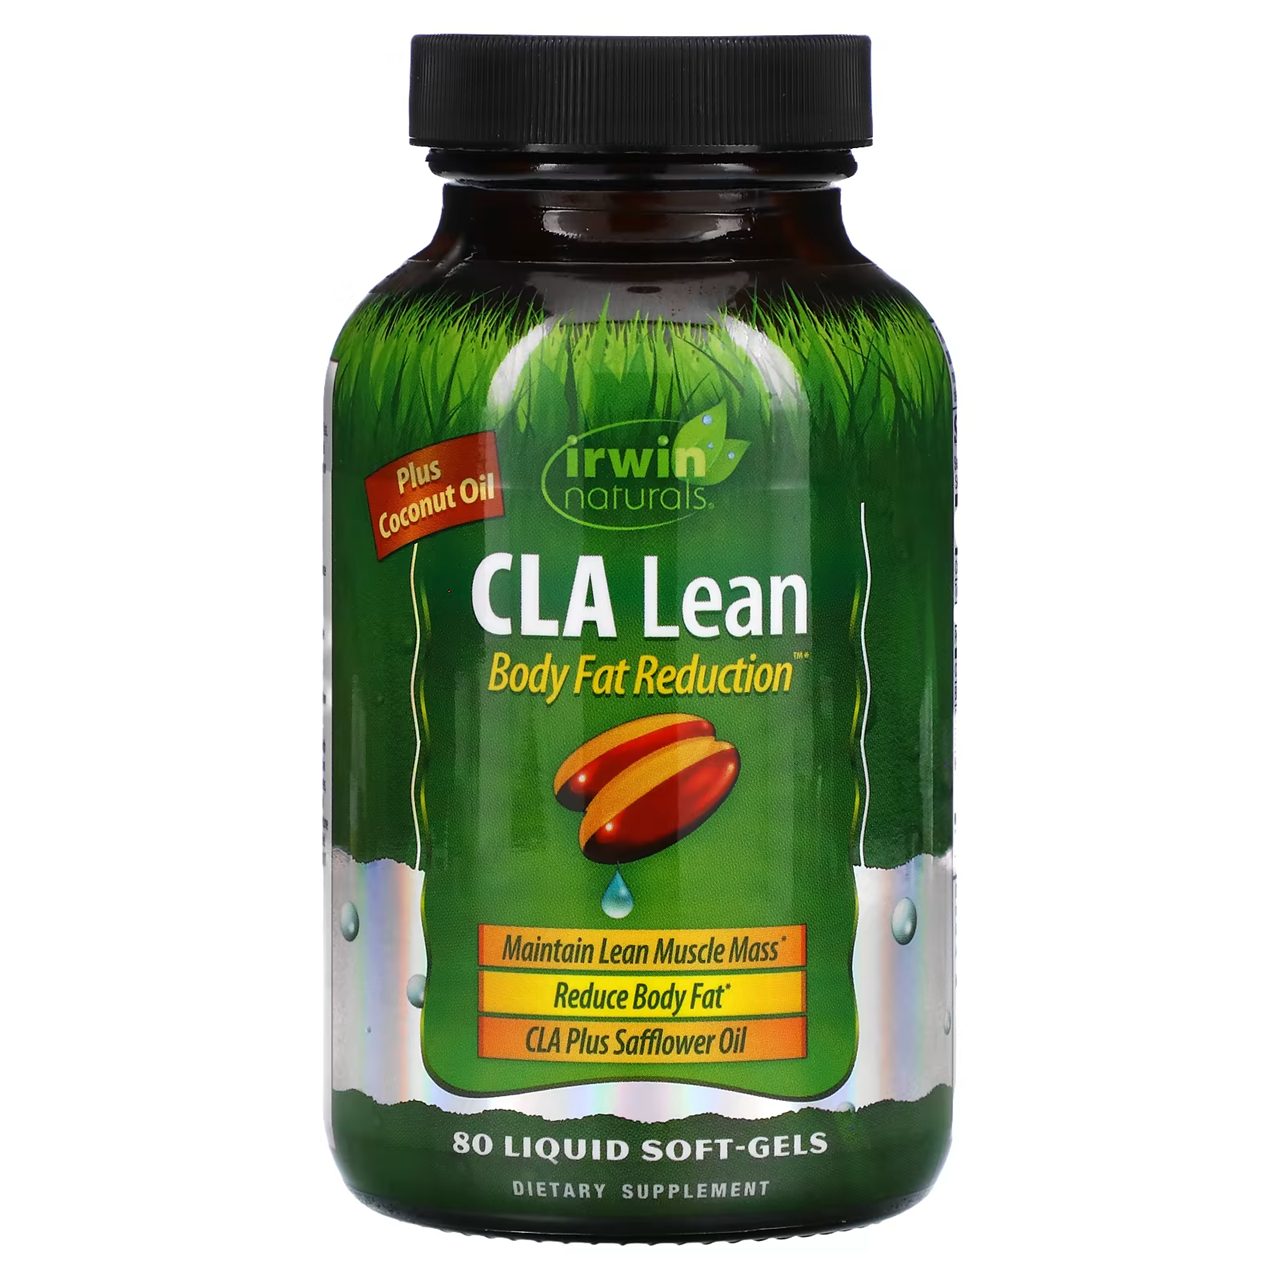 Irwin Naturals, CLA Lean, Body Fat Reduction / 80 Liquid Soft-Gels